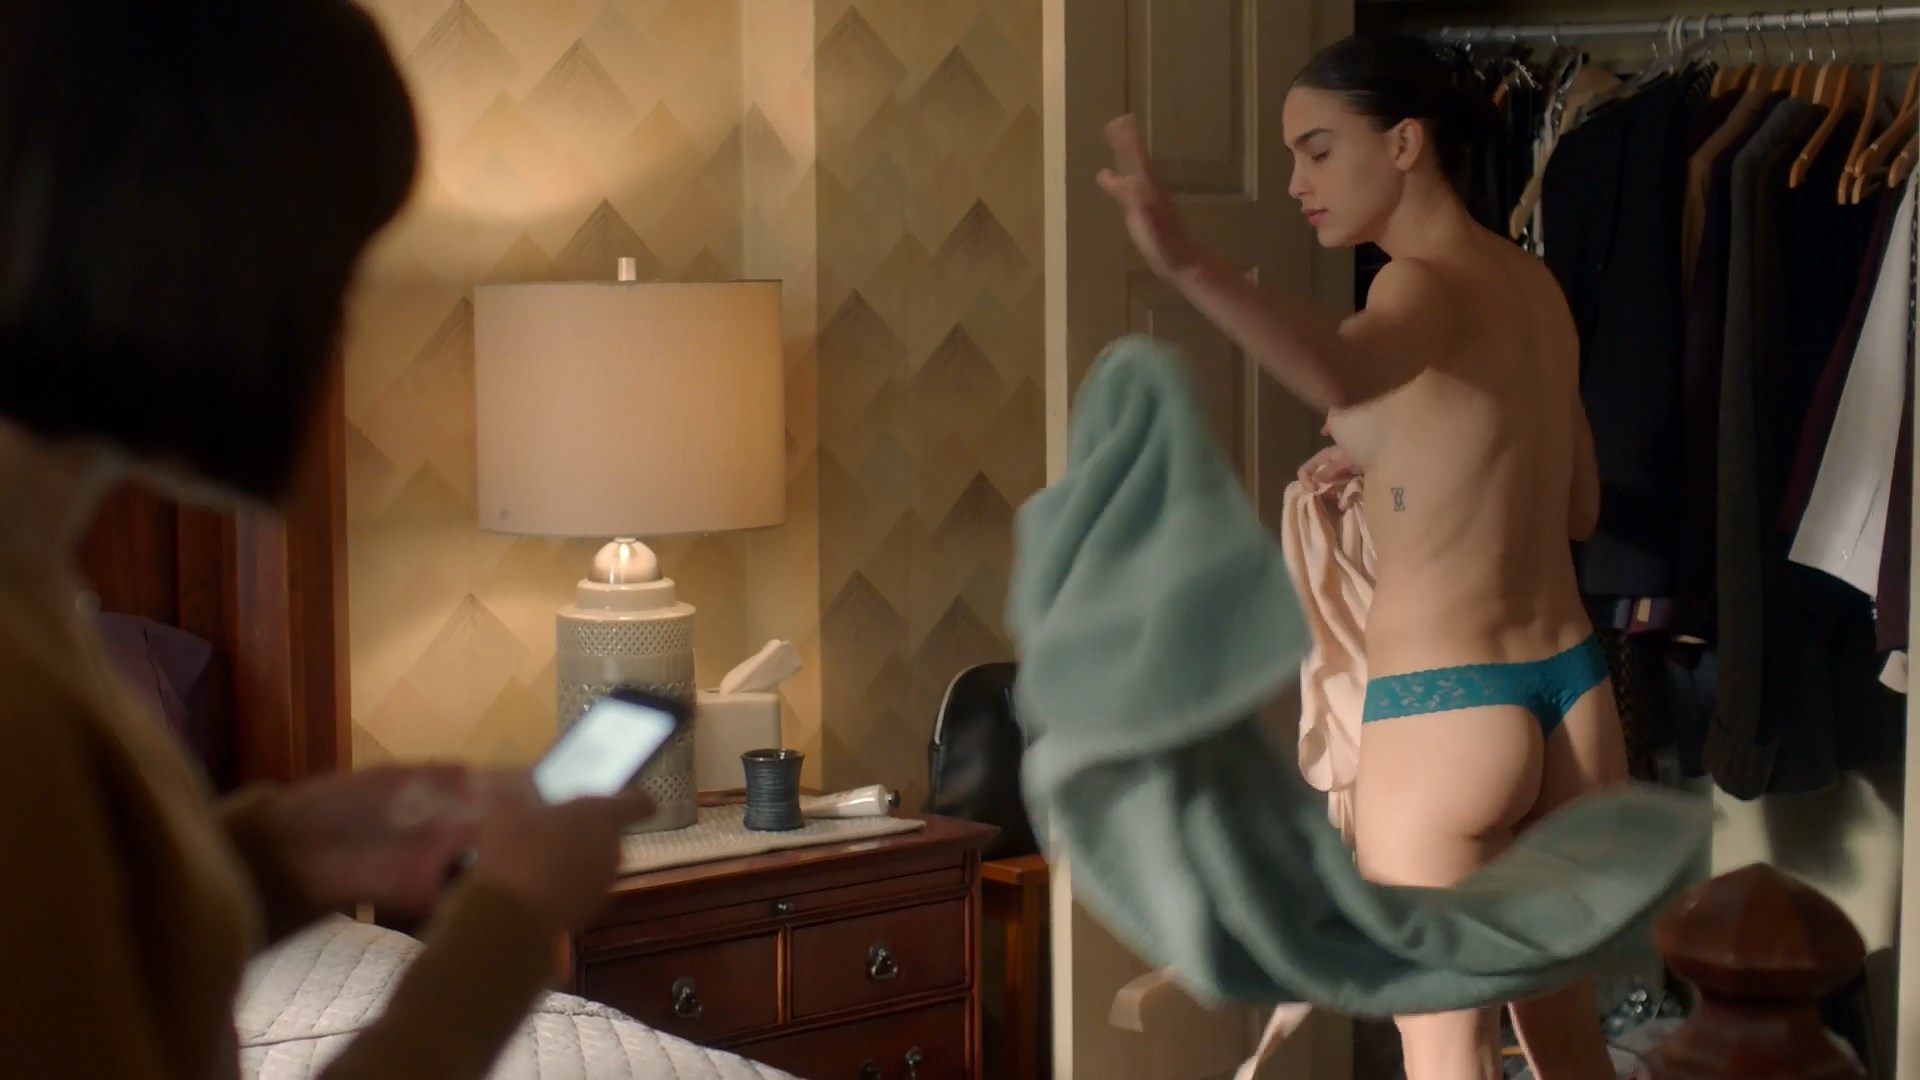 Nude video celebs " Actress " Melissa Barrera.